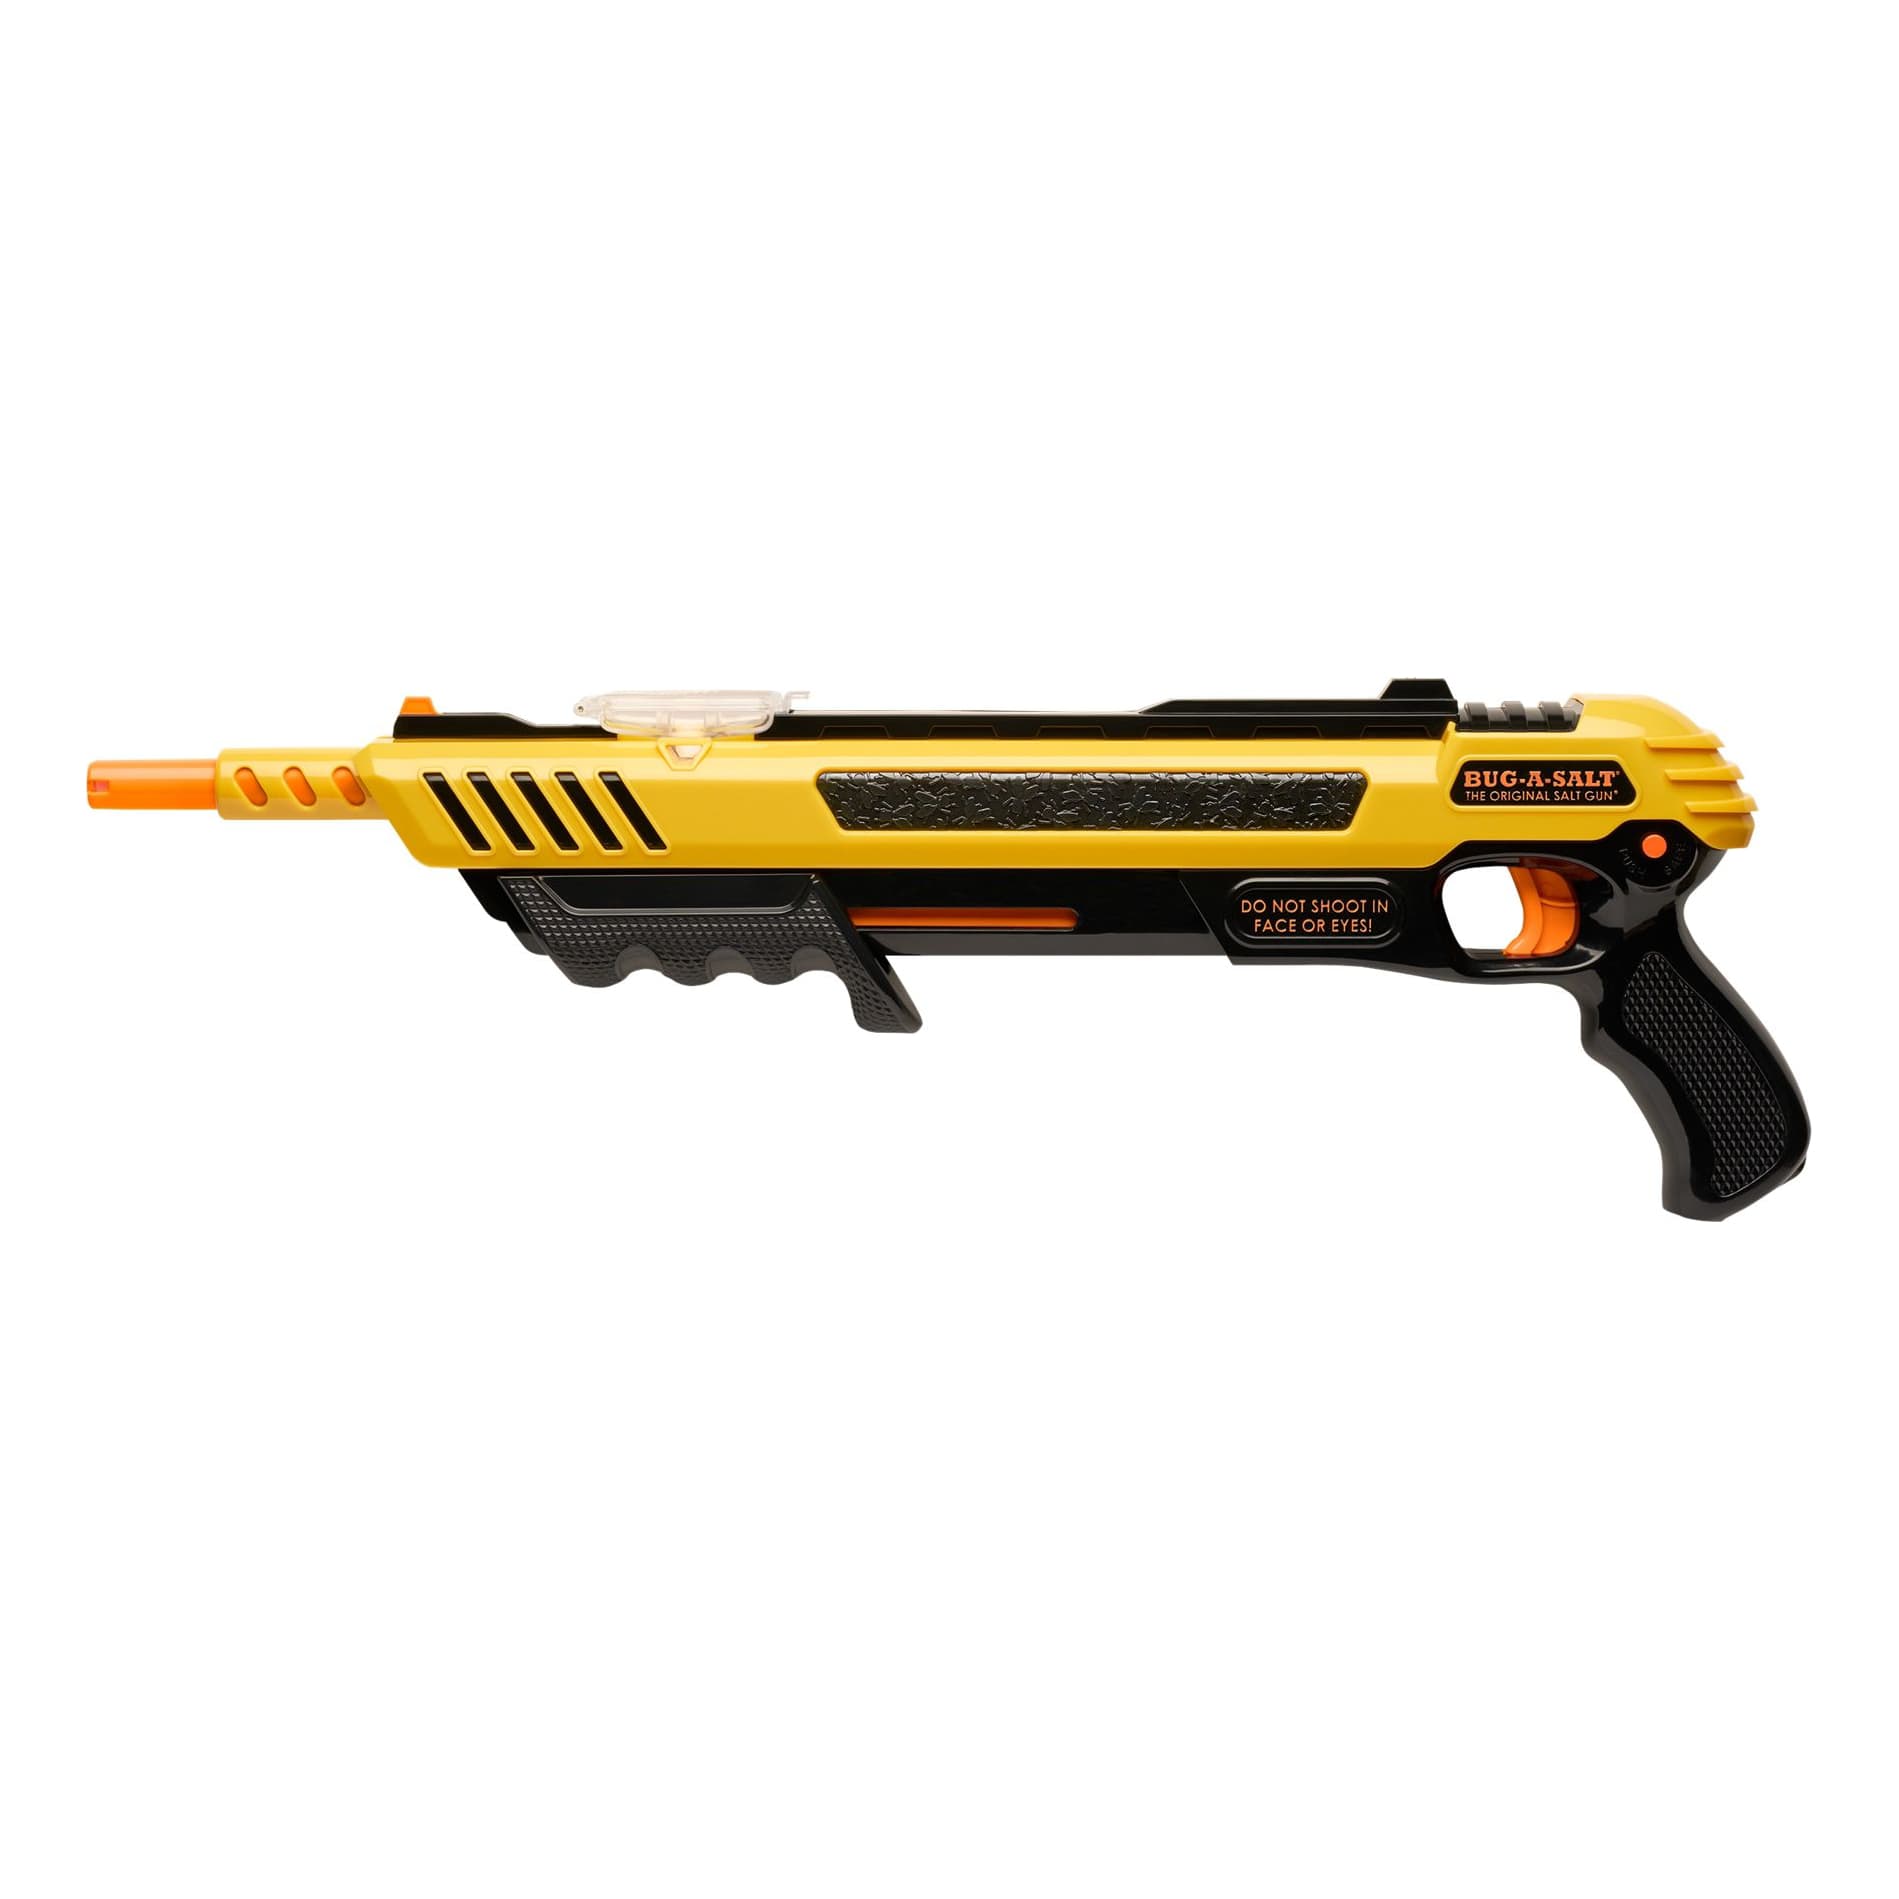 Bug-A-Salt 3.0 Salt Gun - Yellow